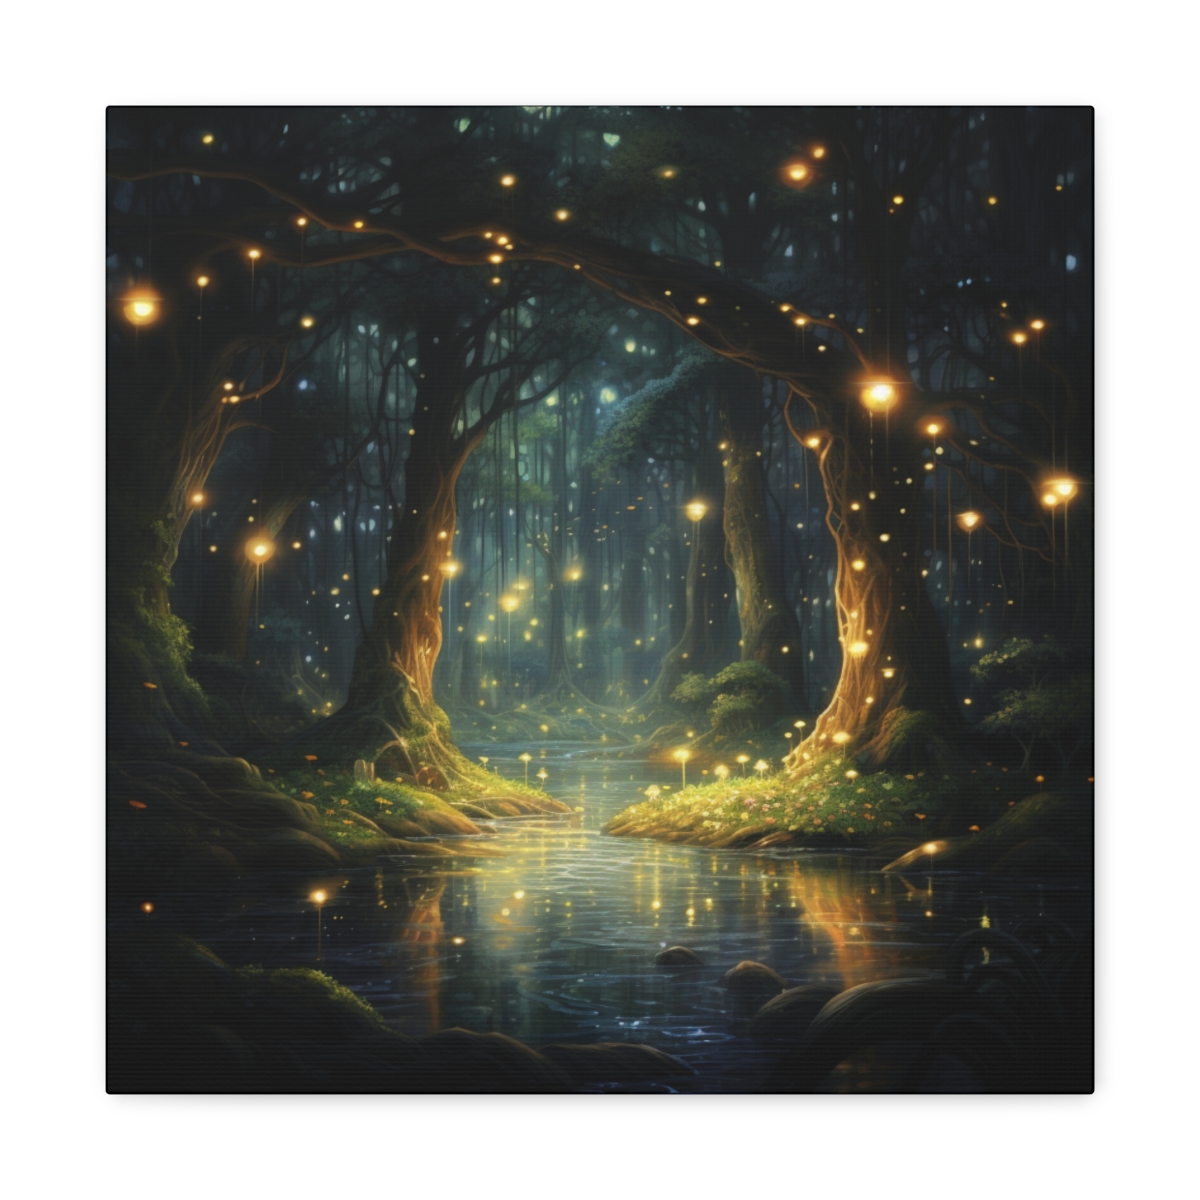 Fantasy Forest Art Canvas Print: Wonder Of Wisdom